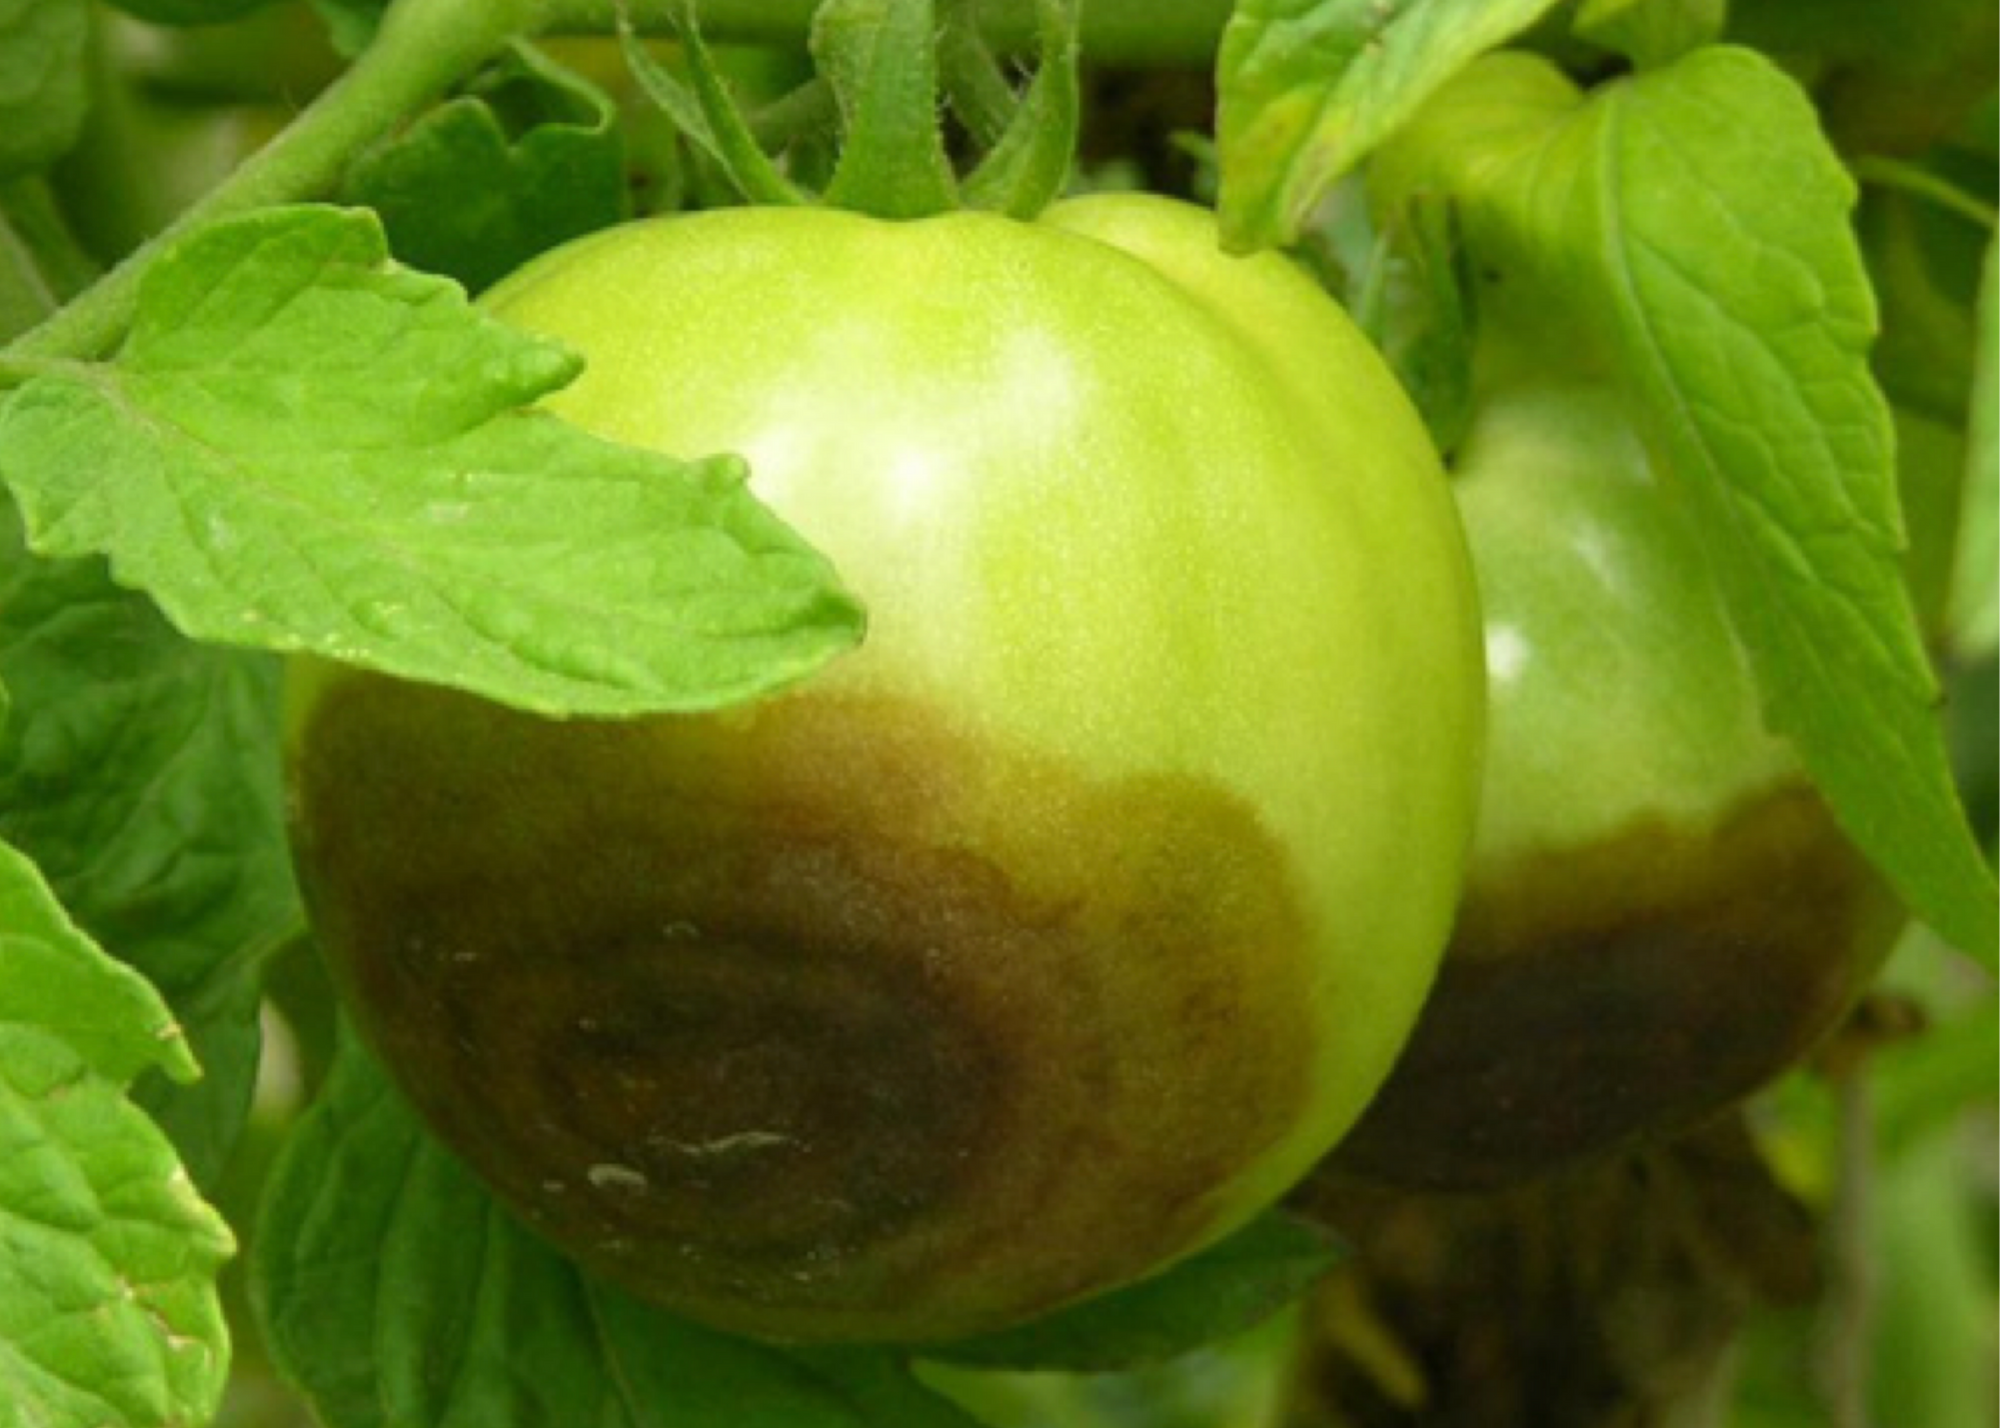 Buckeye rot in green tomato.